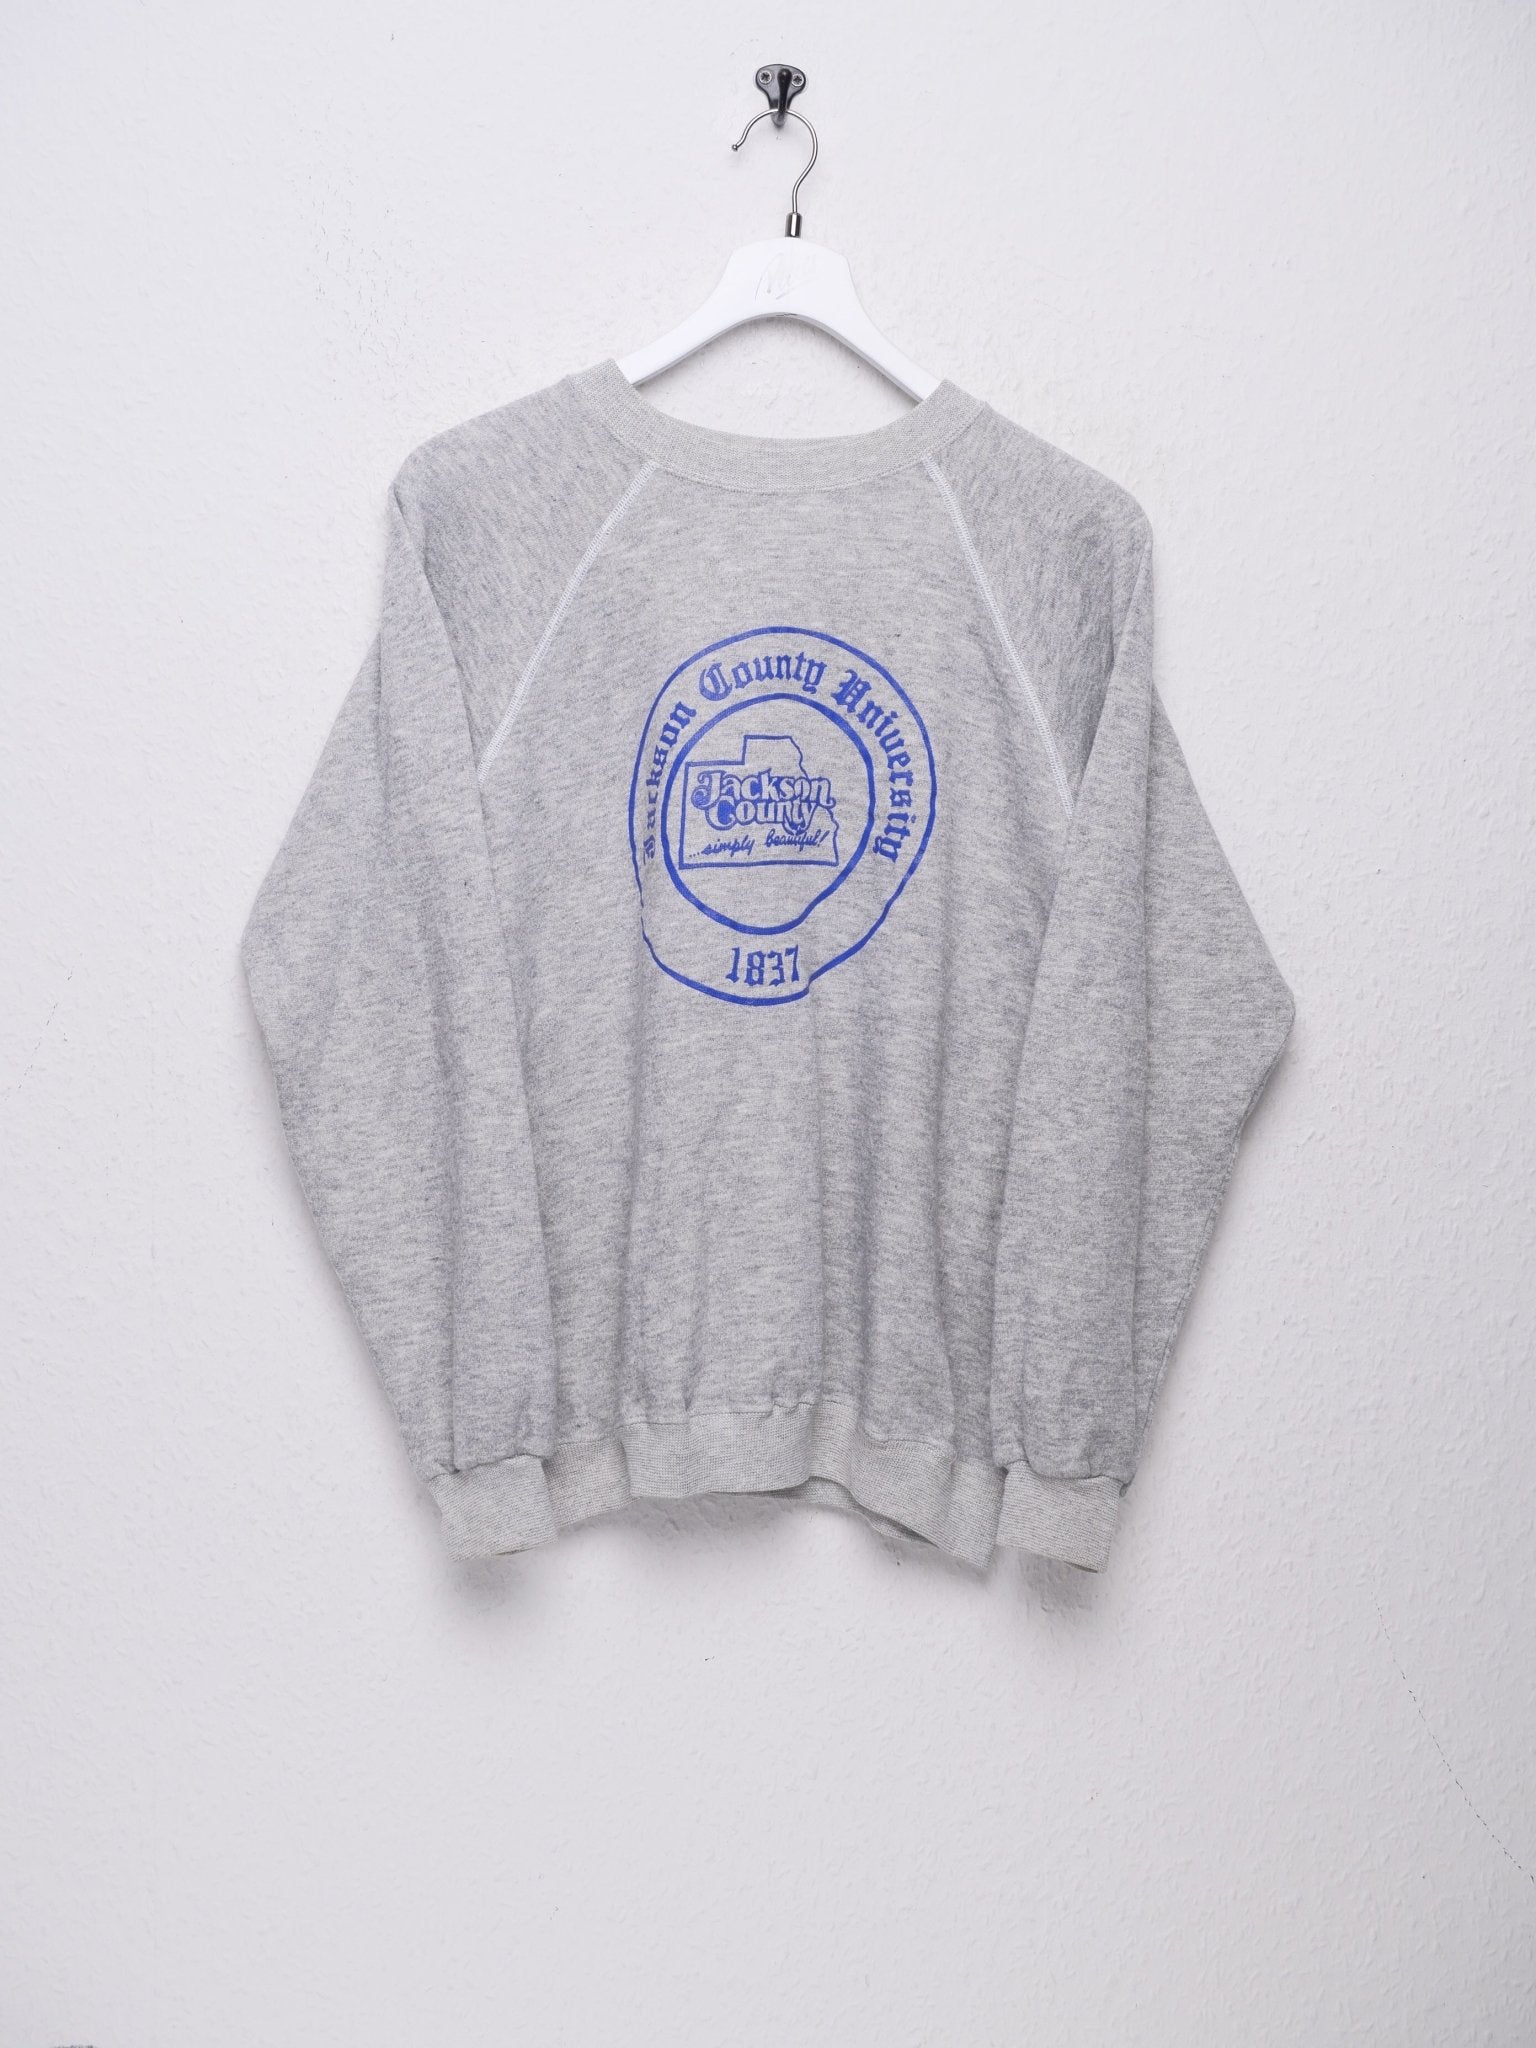 'Jackson County University' printed Logo grey Sweater - Peeces